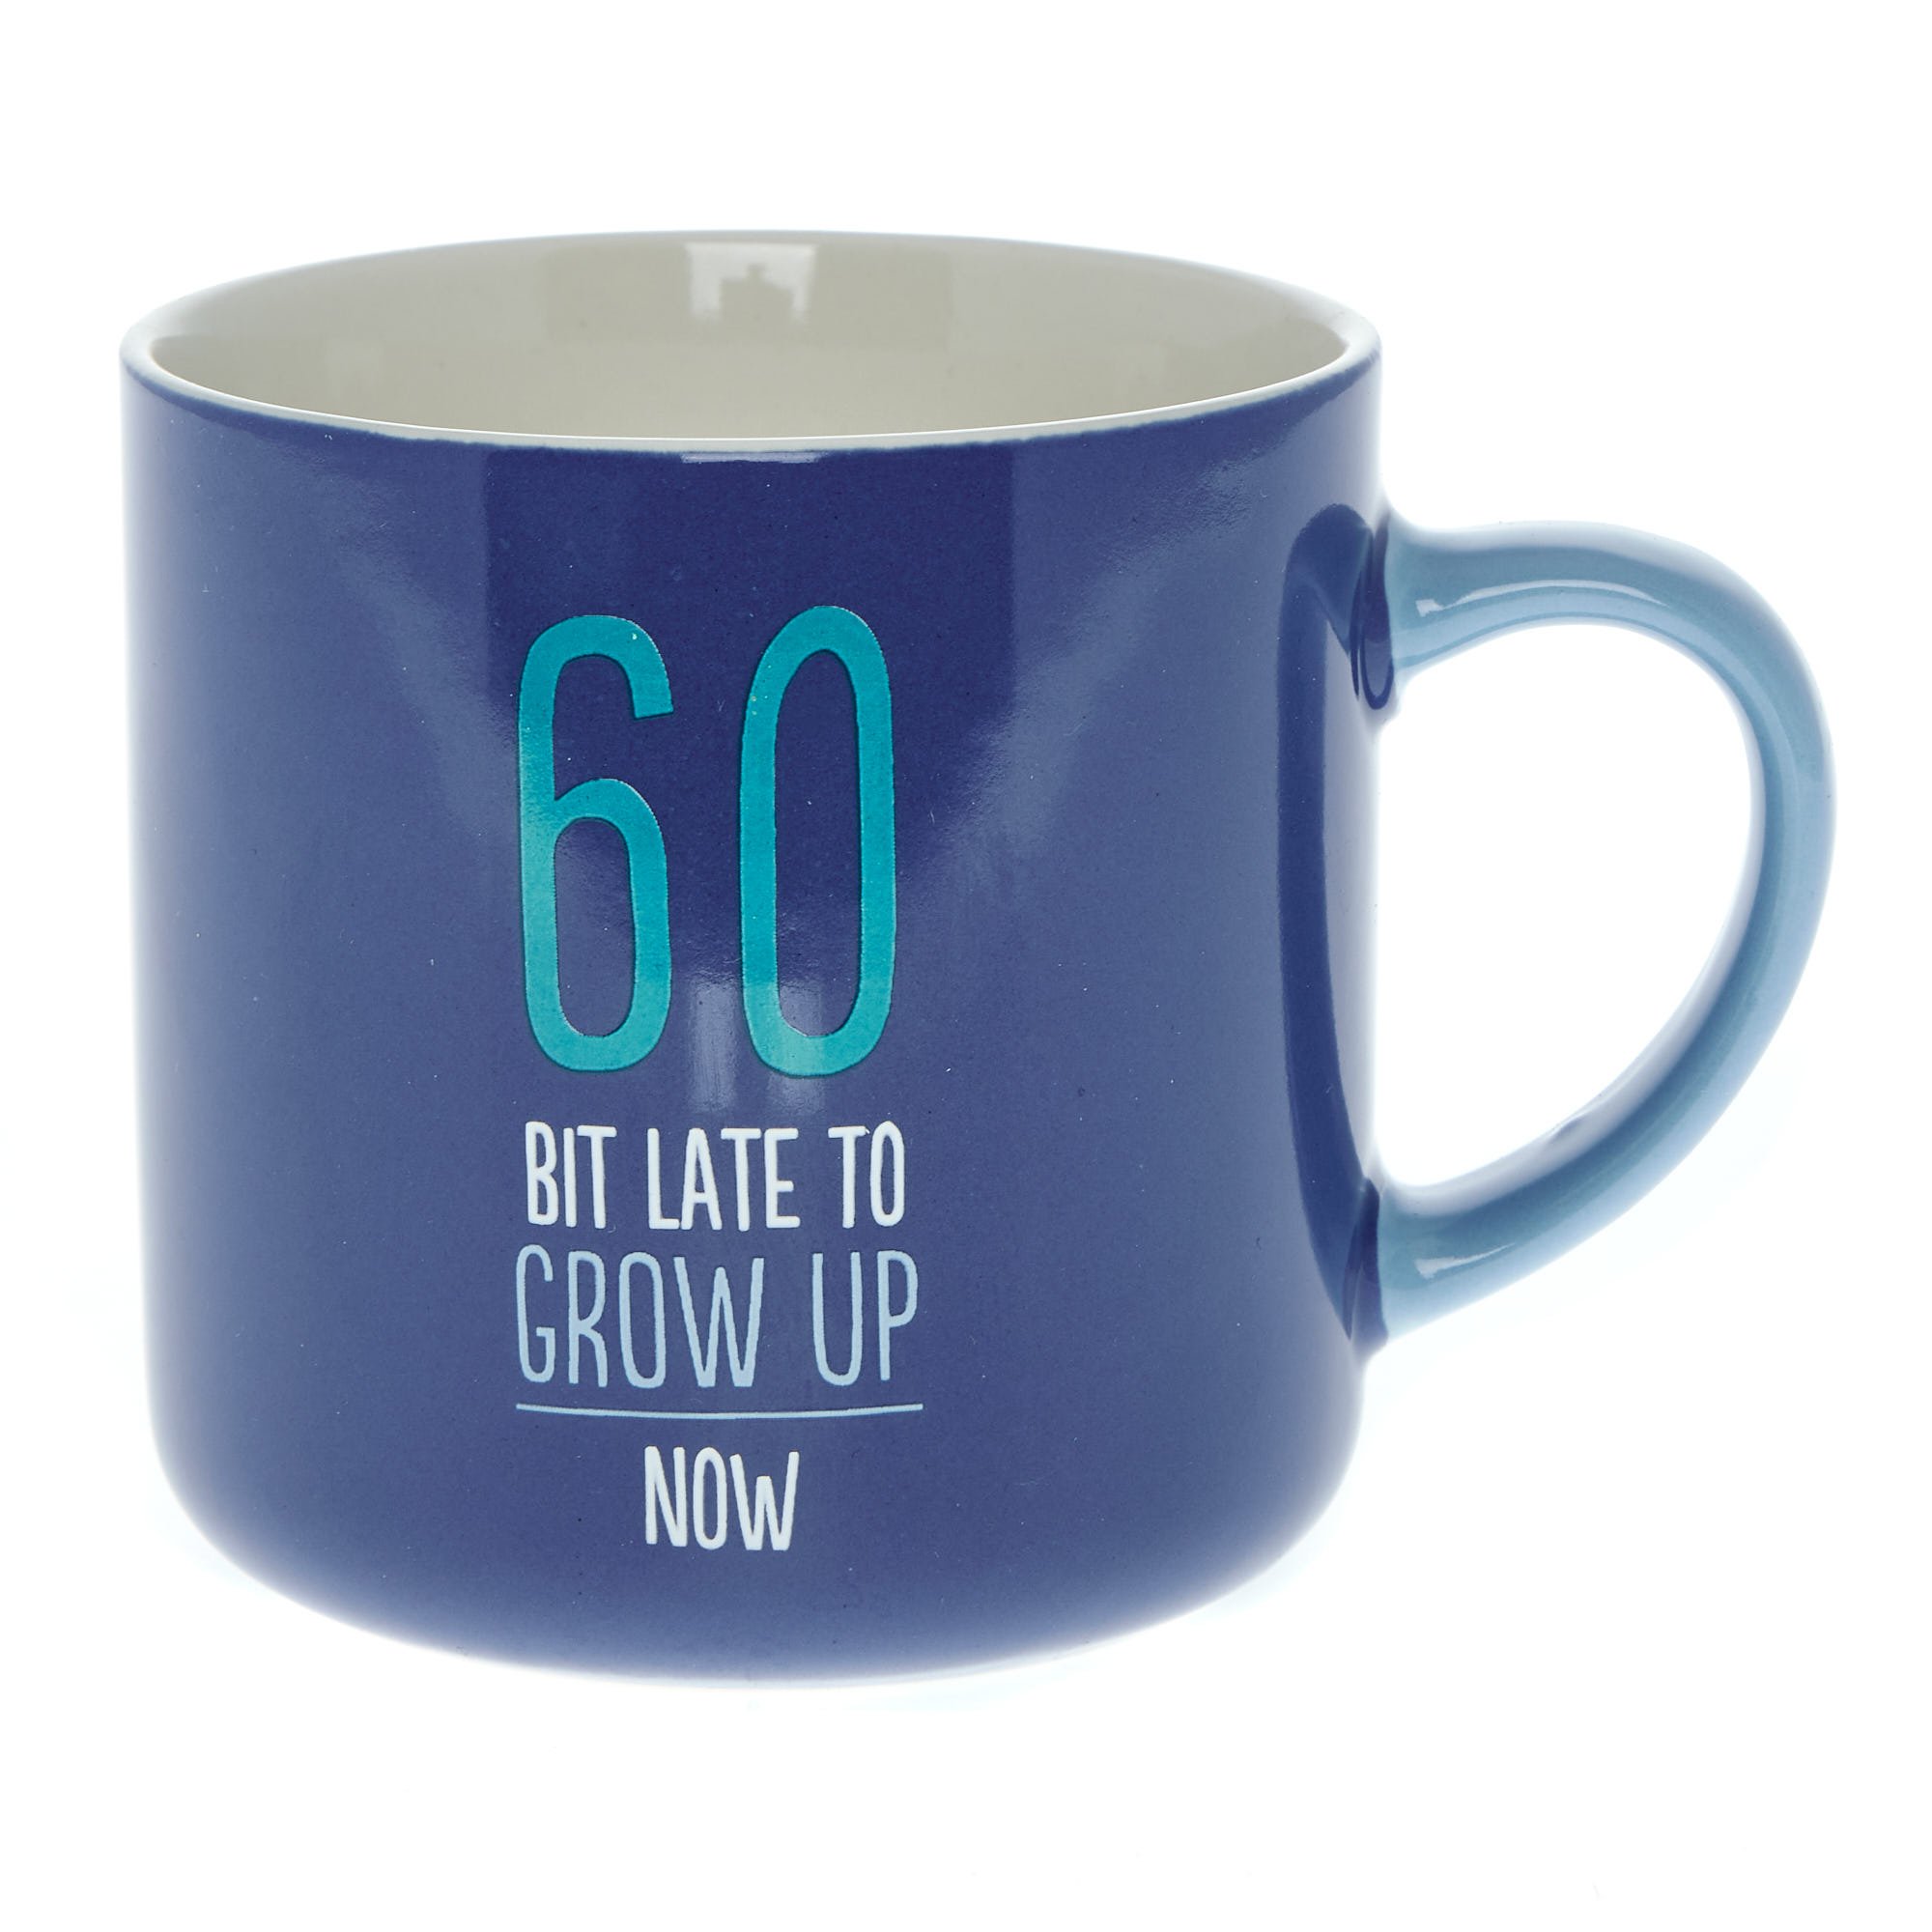 Bit Late to Grow Up 60th Birthday Mug